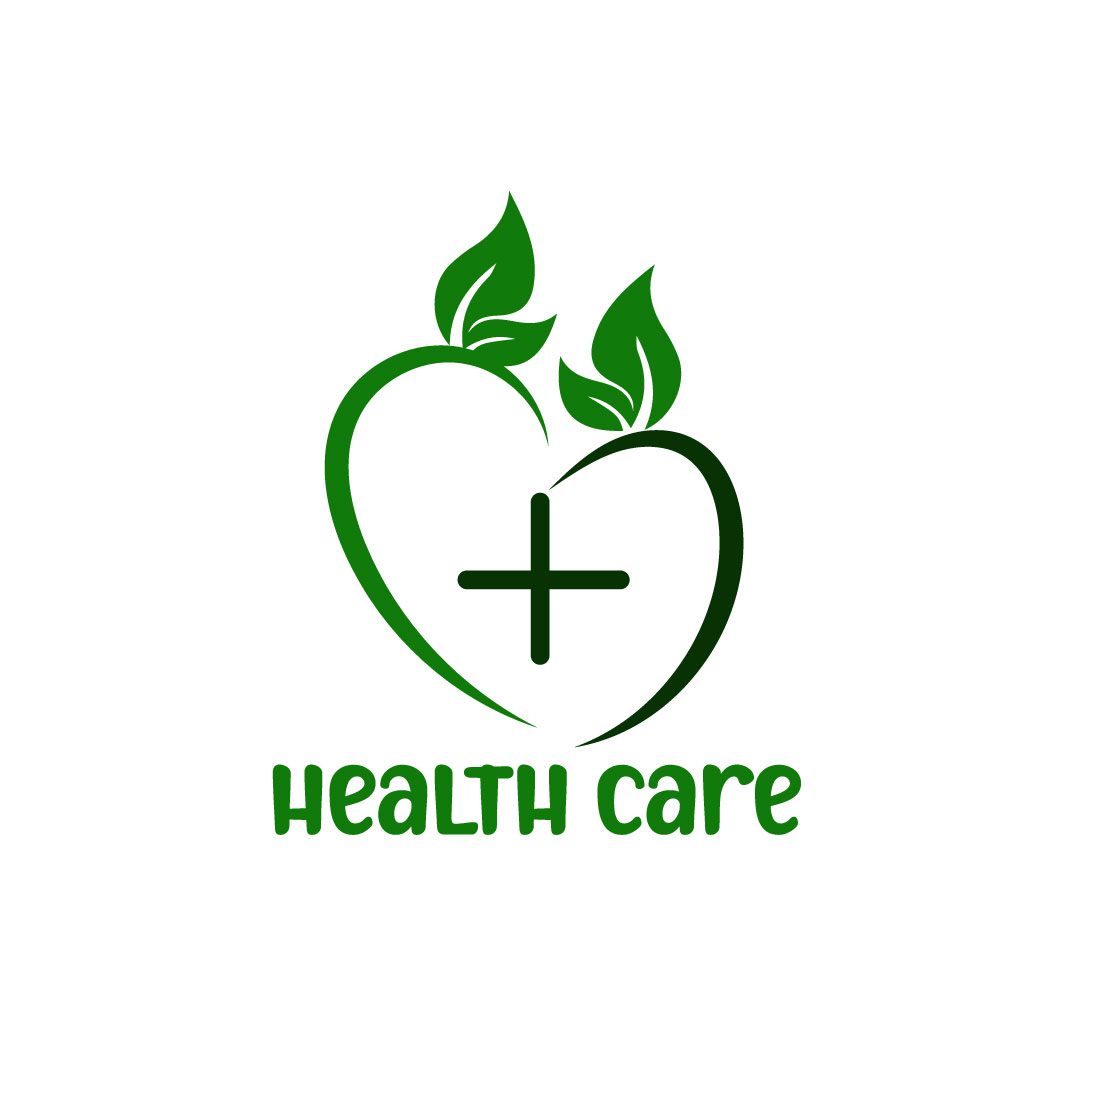 Free Medical Association logo preview image.